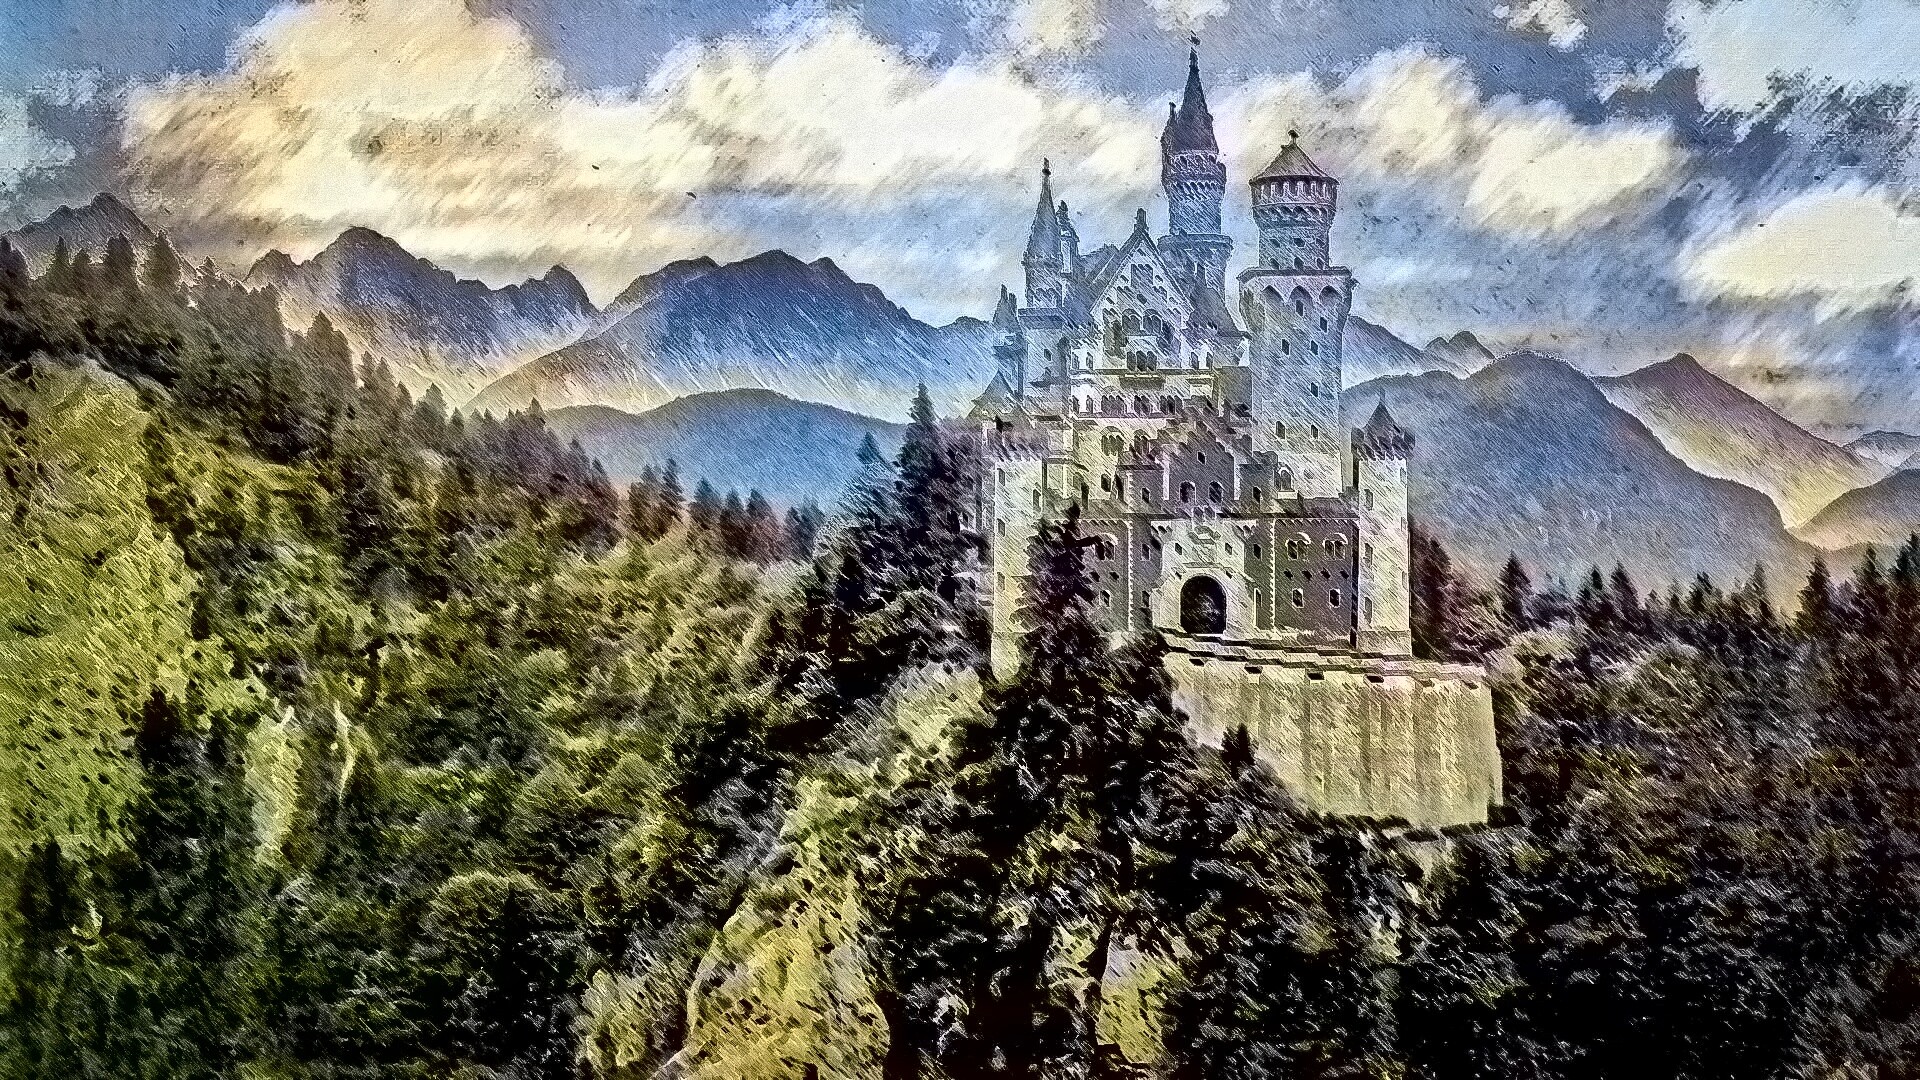 ArtStation - Landscape with castle